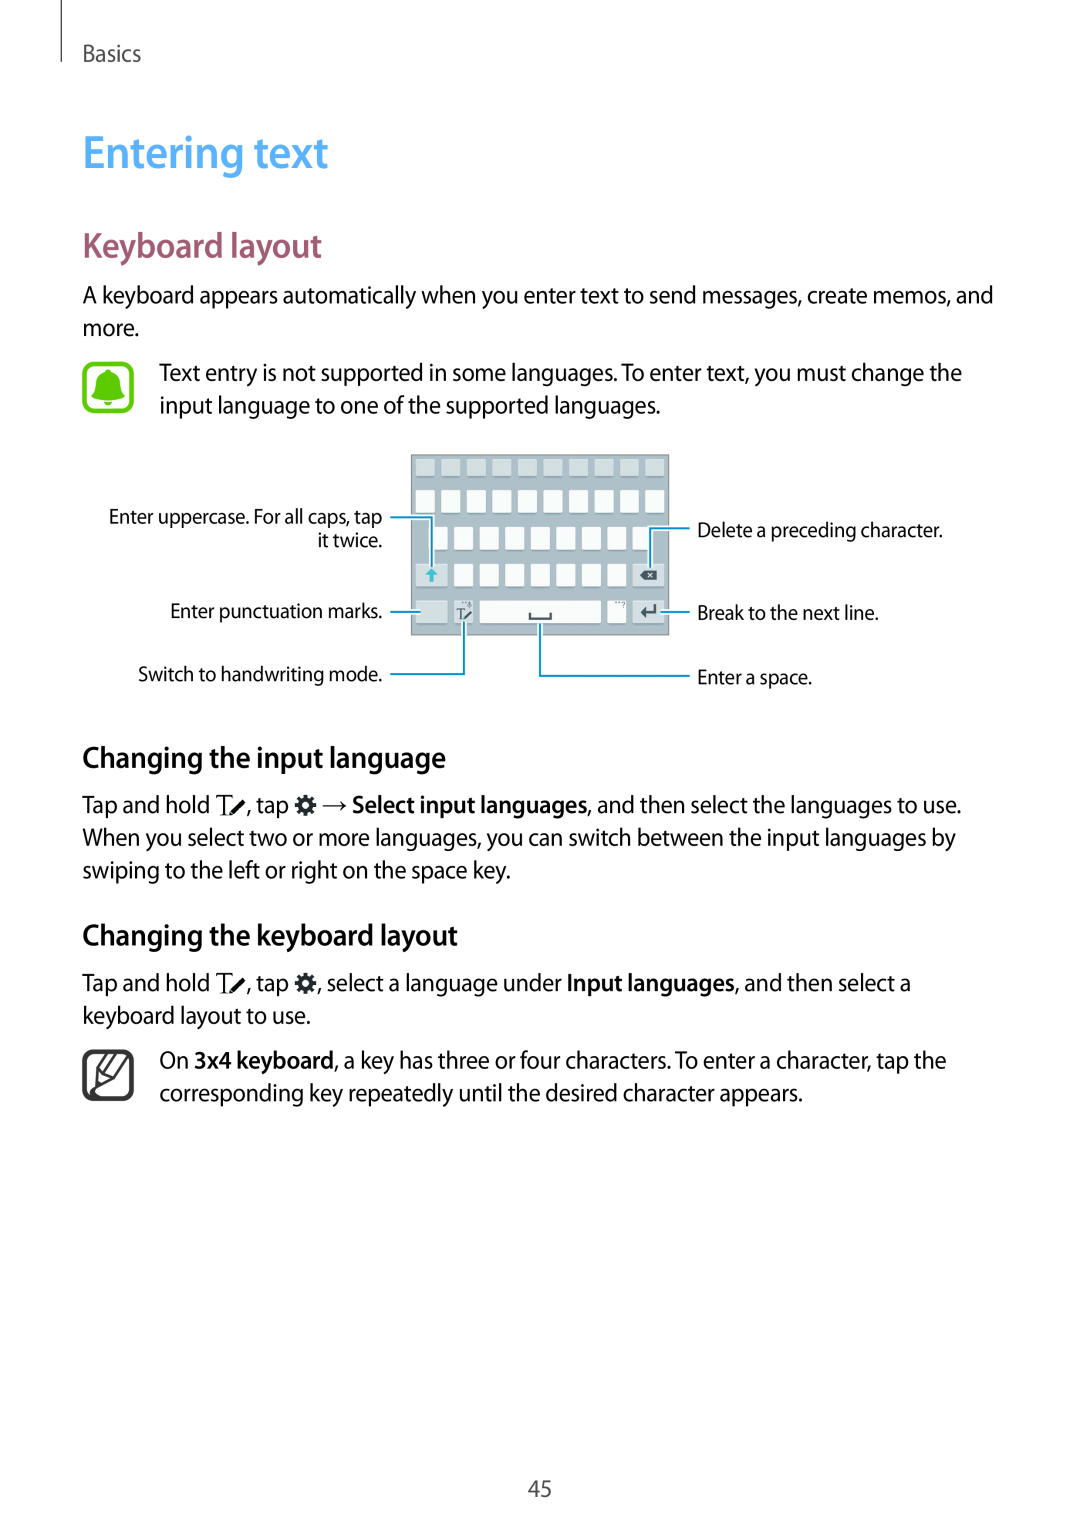 Samsung SM-N915FZKYAUT Entering text, Keyboard layout, Changing the input language, Changing the keyboard layout, Basics 